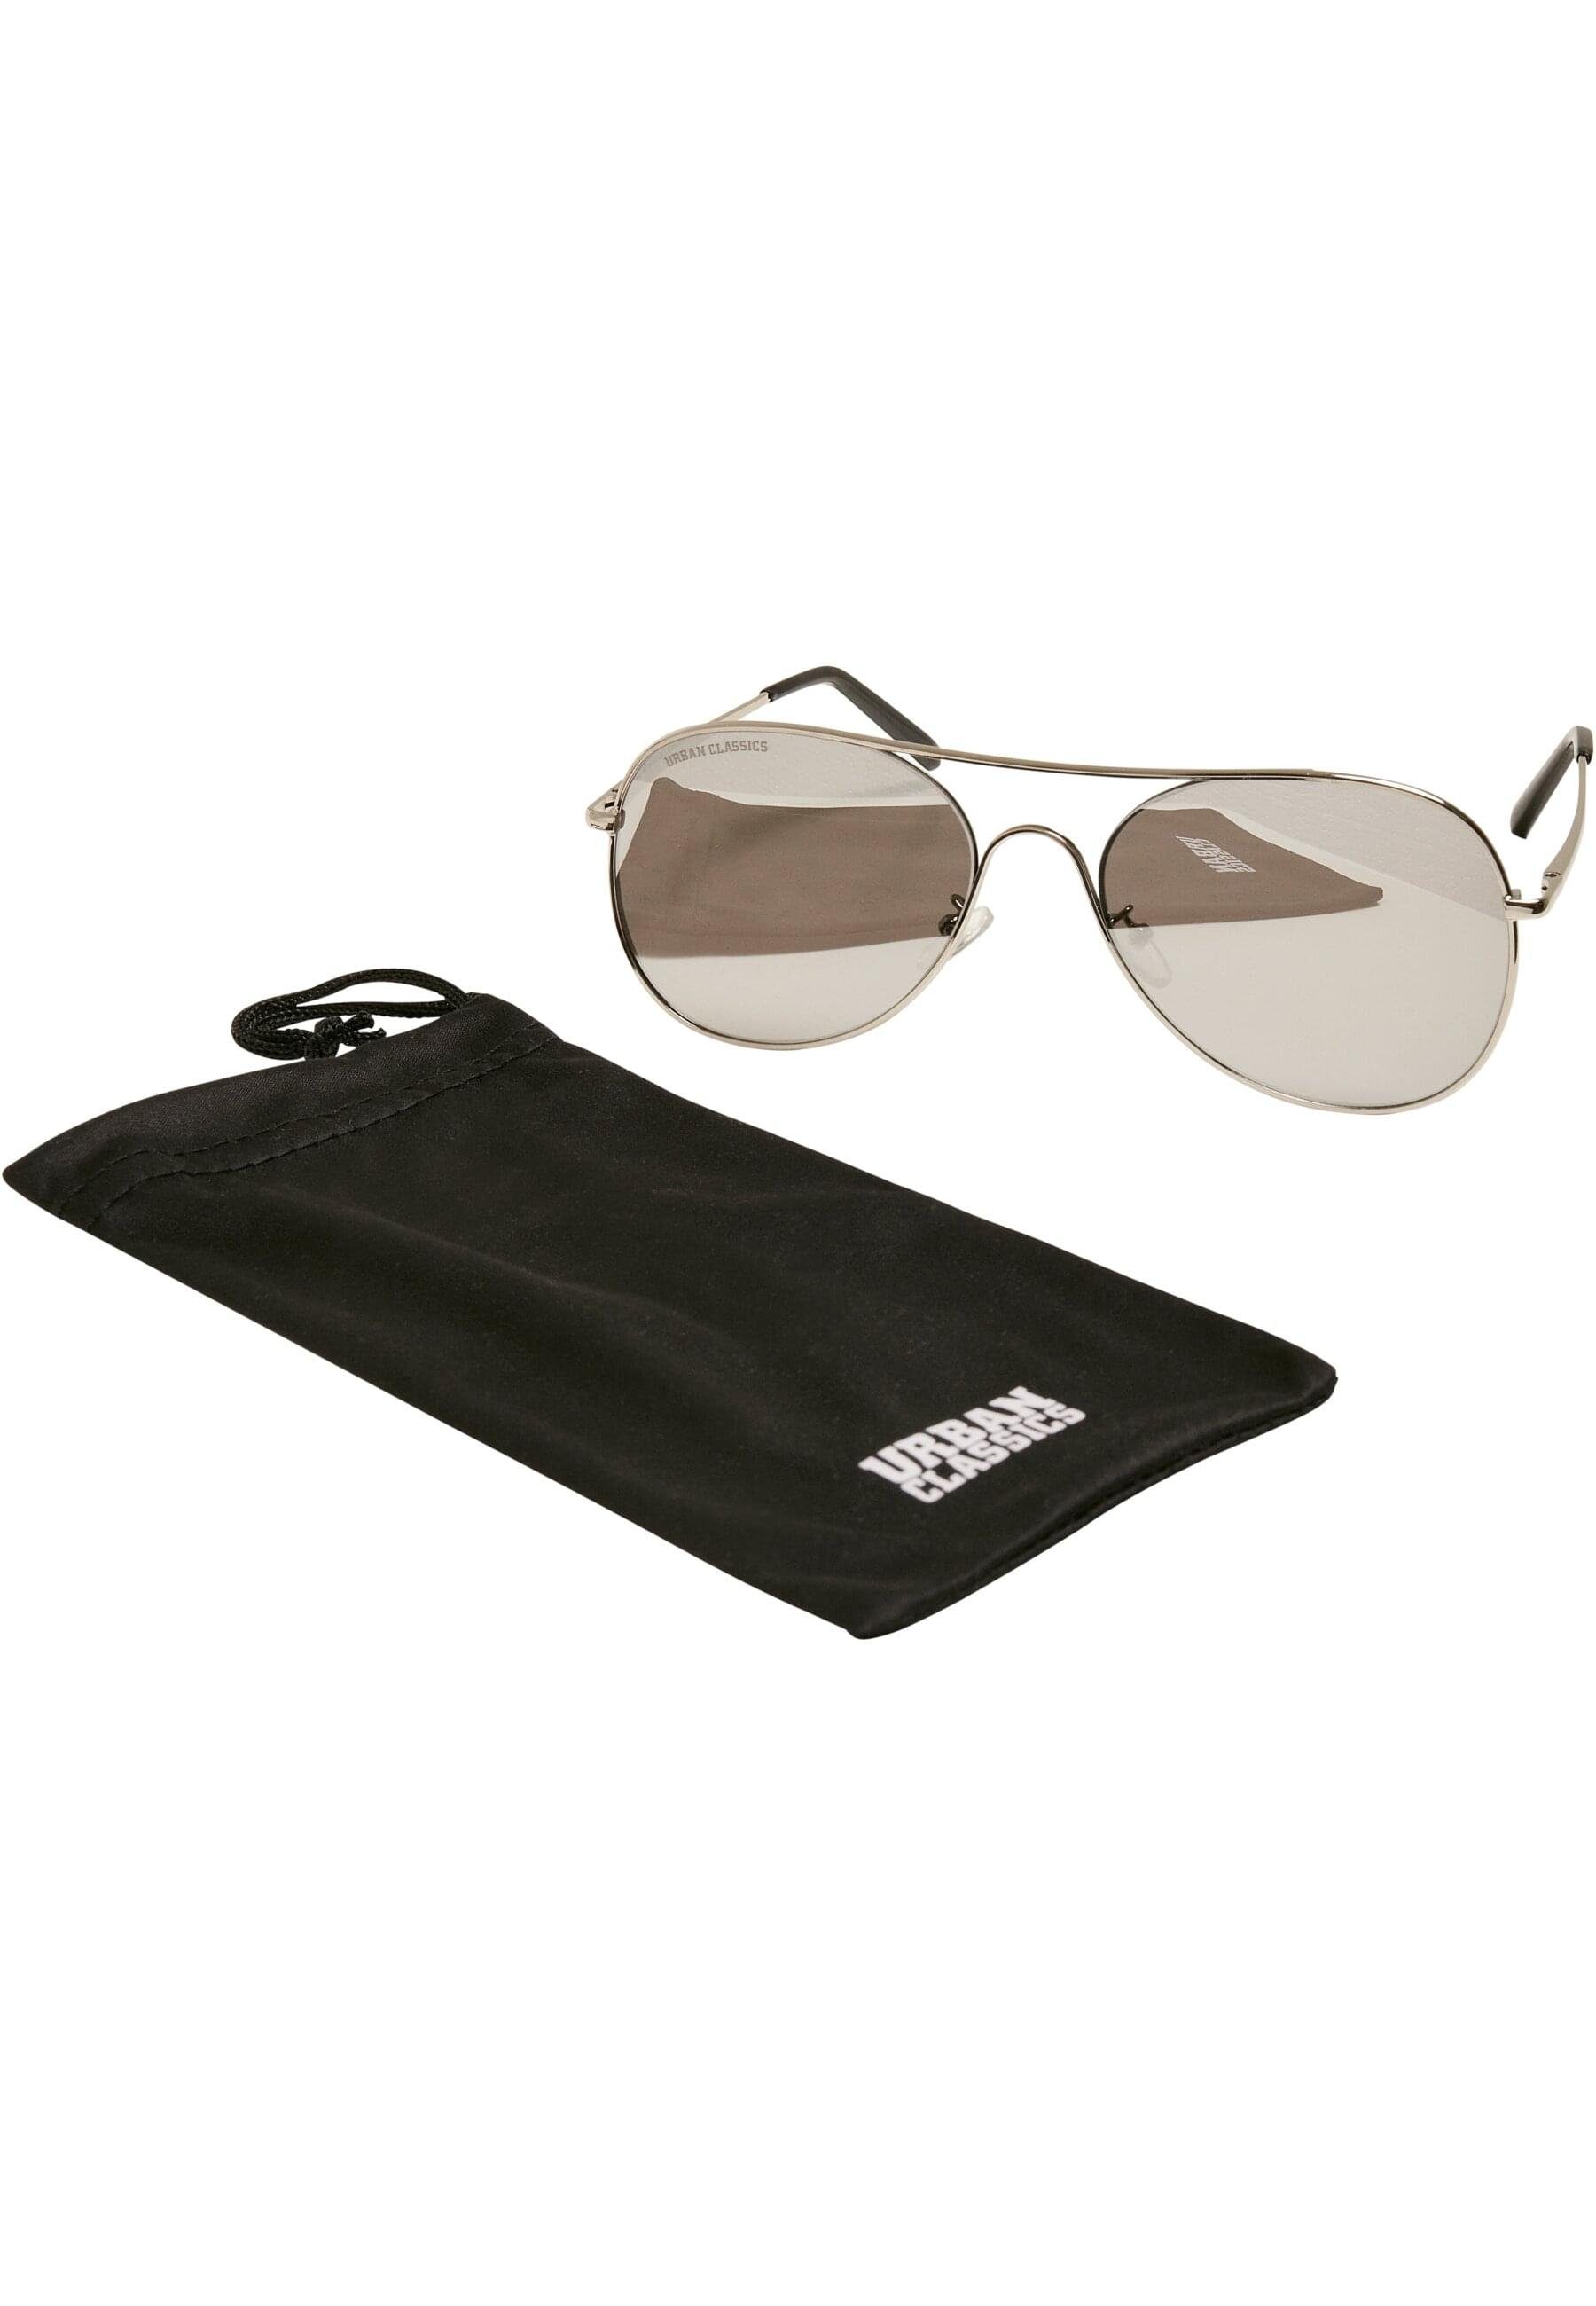 URBAN CLASSICS Sonnenbrille Unisex Sunglasses Texas silver/silver